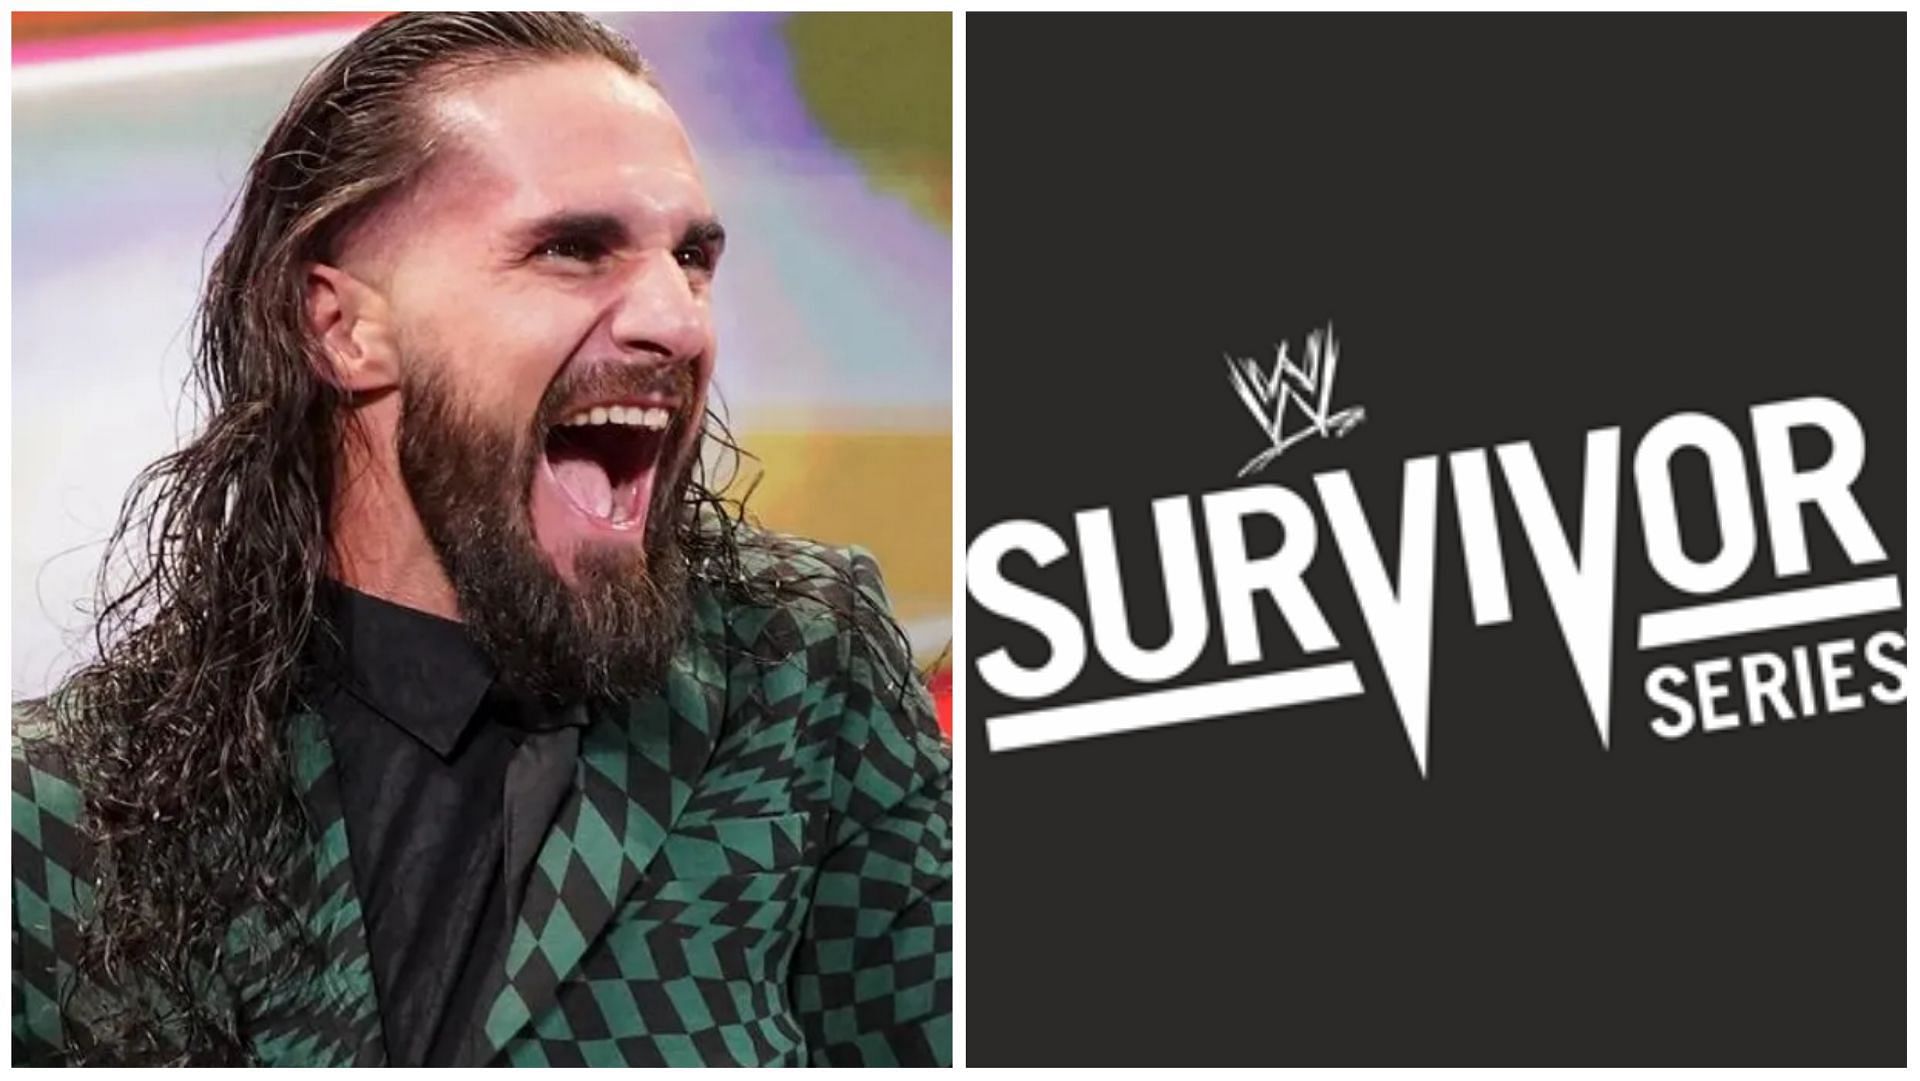 Seth Rollins (L); WWE Survivor Series logo (R)